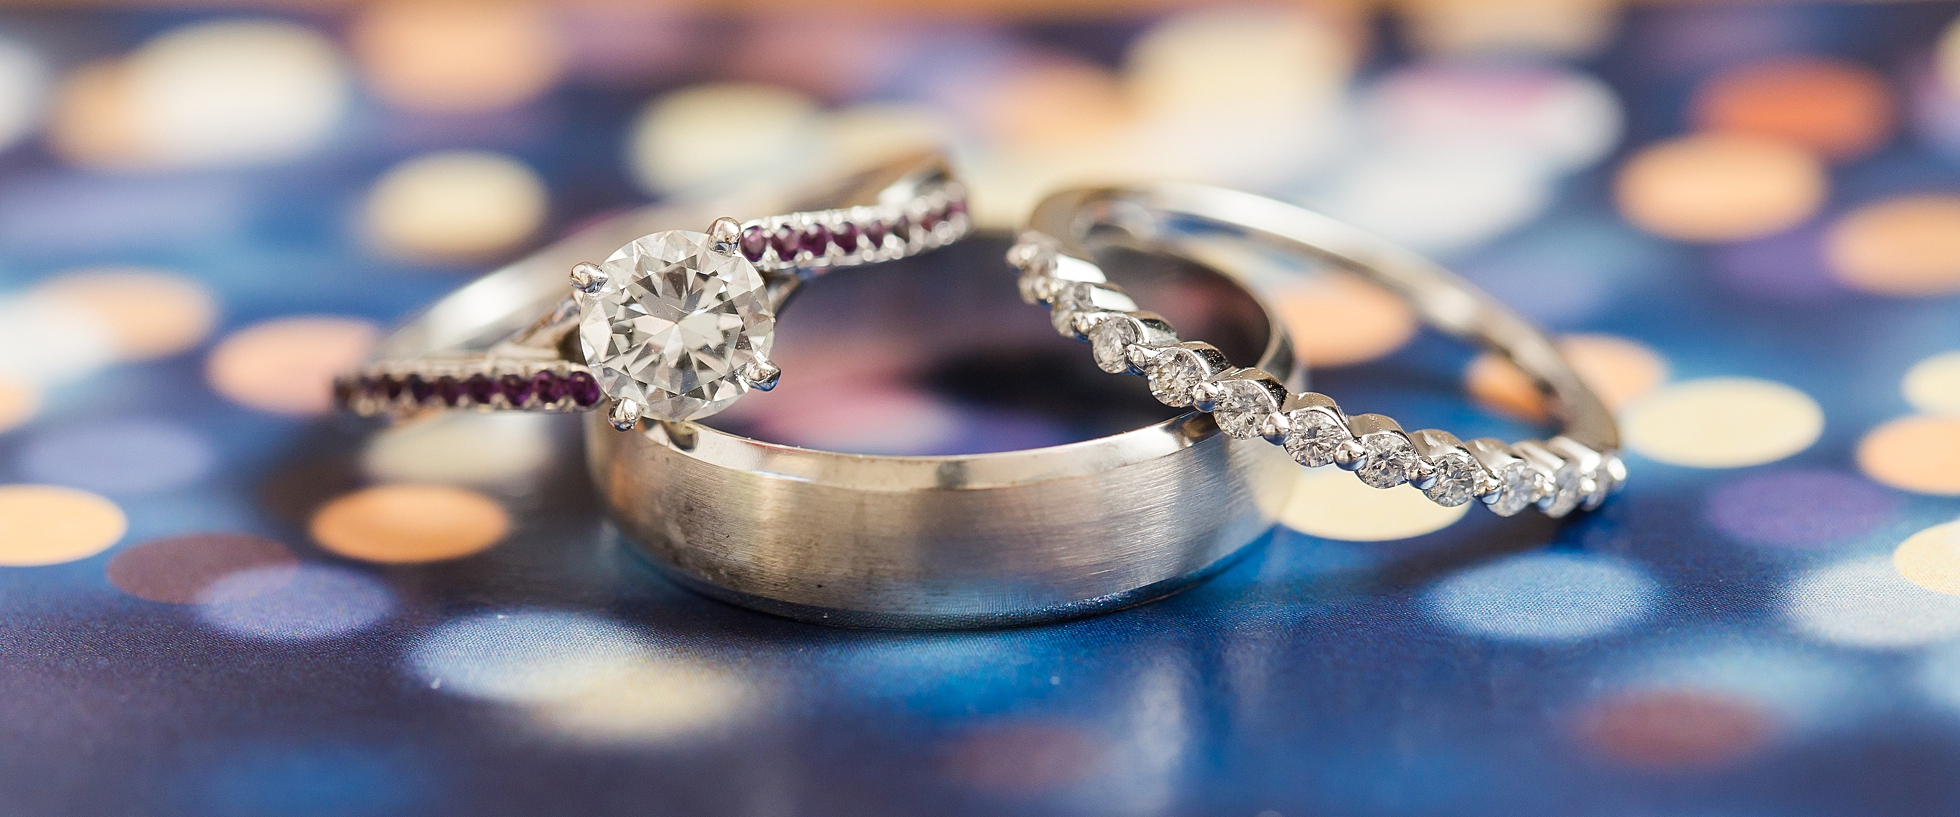 purple engagement wedding rings